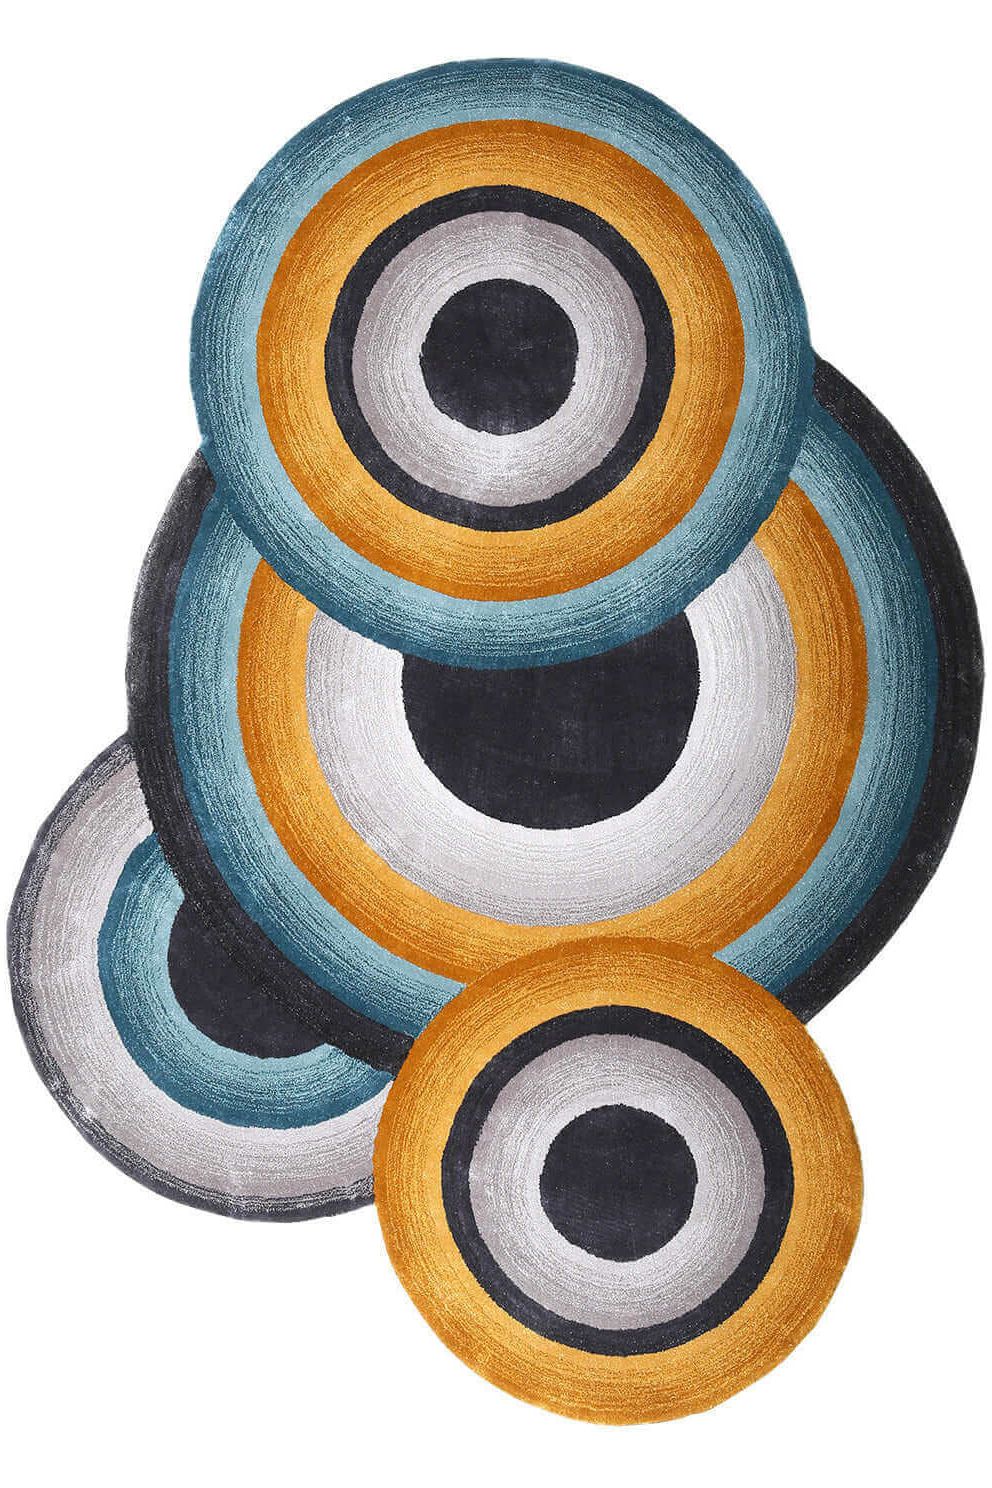 #Turkish_Carpets_Rugs# #Modern_Carpets# #Abrash_Carpets#Circle 001-J